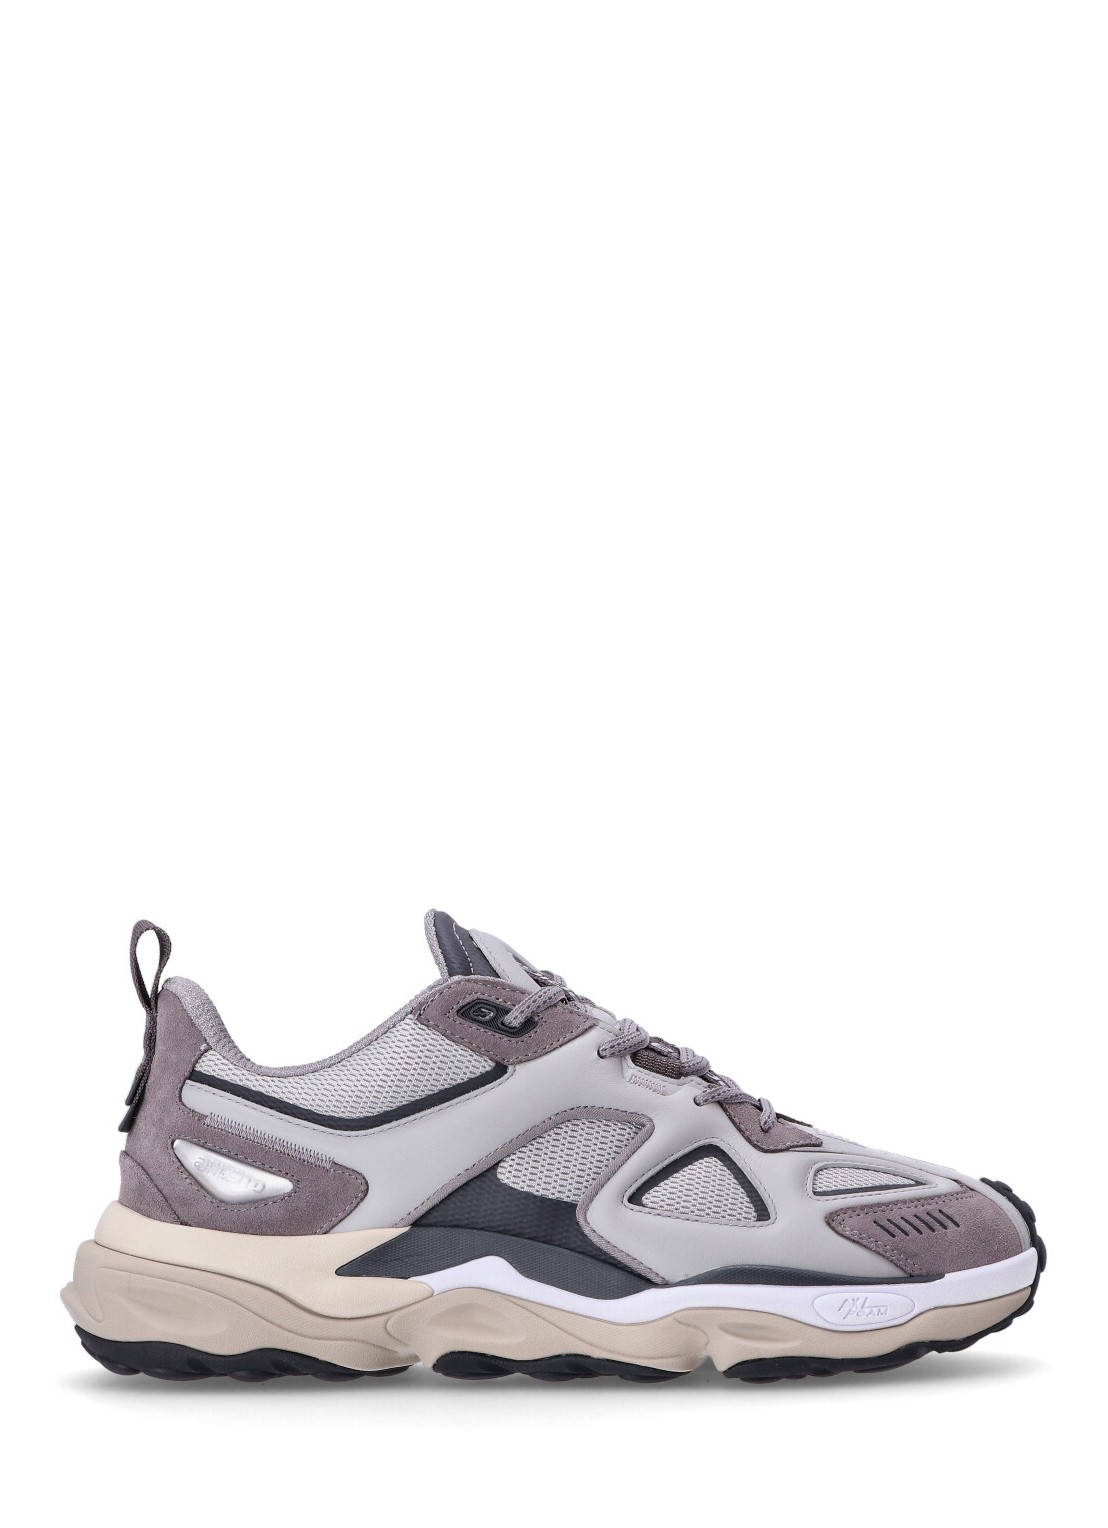 Sneaker axel arigato sneaker man satellite runner f1679002 light grey grey talla 42
 